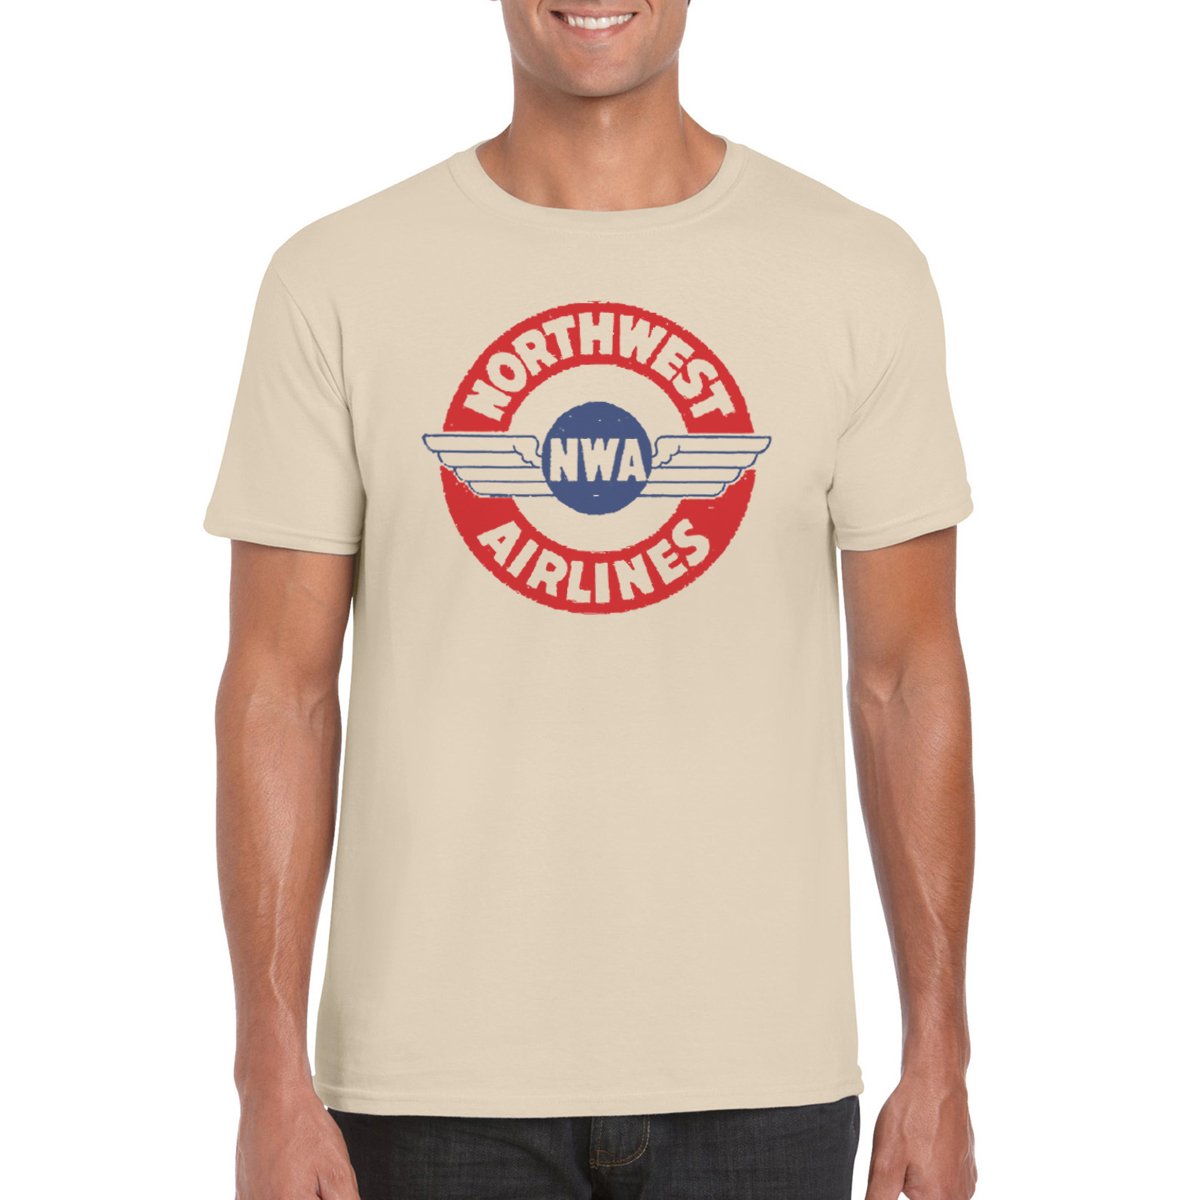 NORTHWEST AIRLINES LOGO T-Shirt